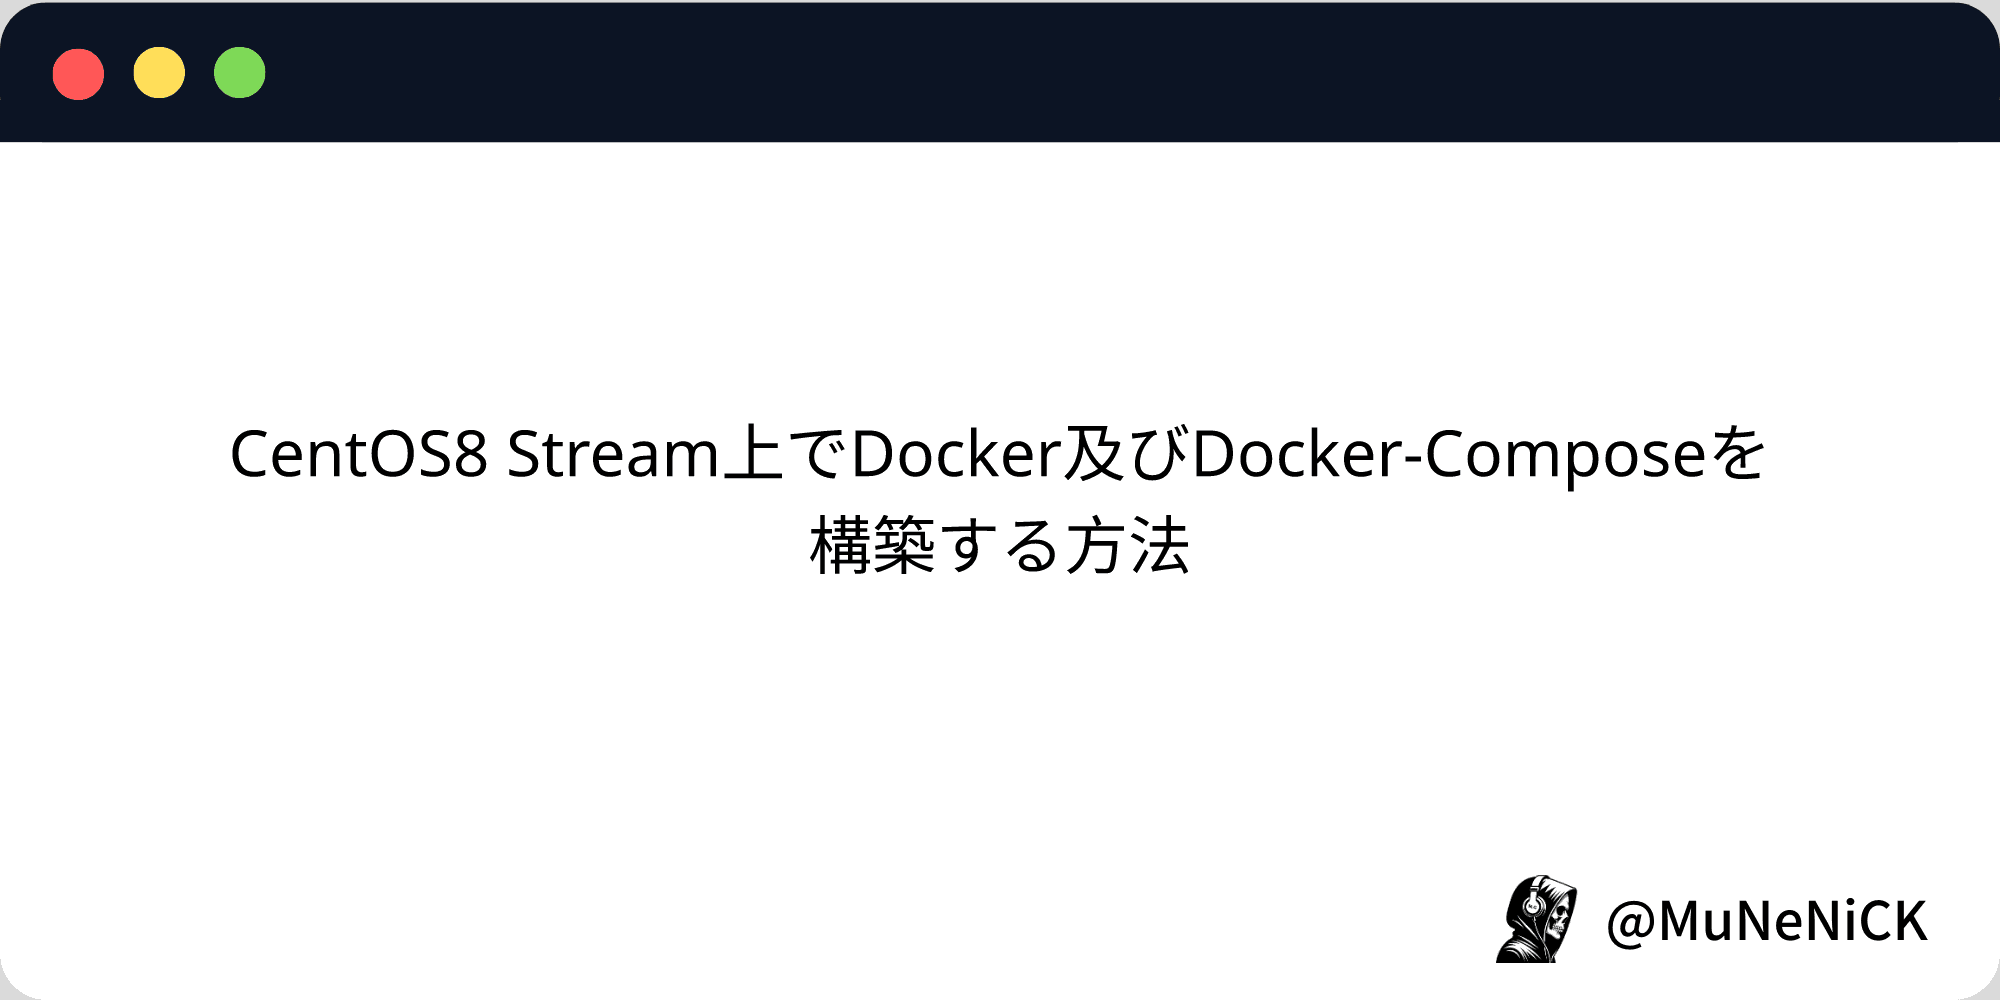 Cover Image for CentOS8 Stream上でDocker及びDocker-Composeを構築する方法